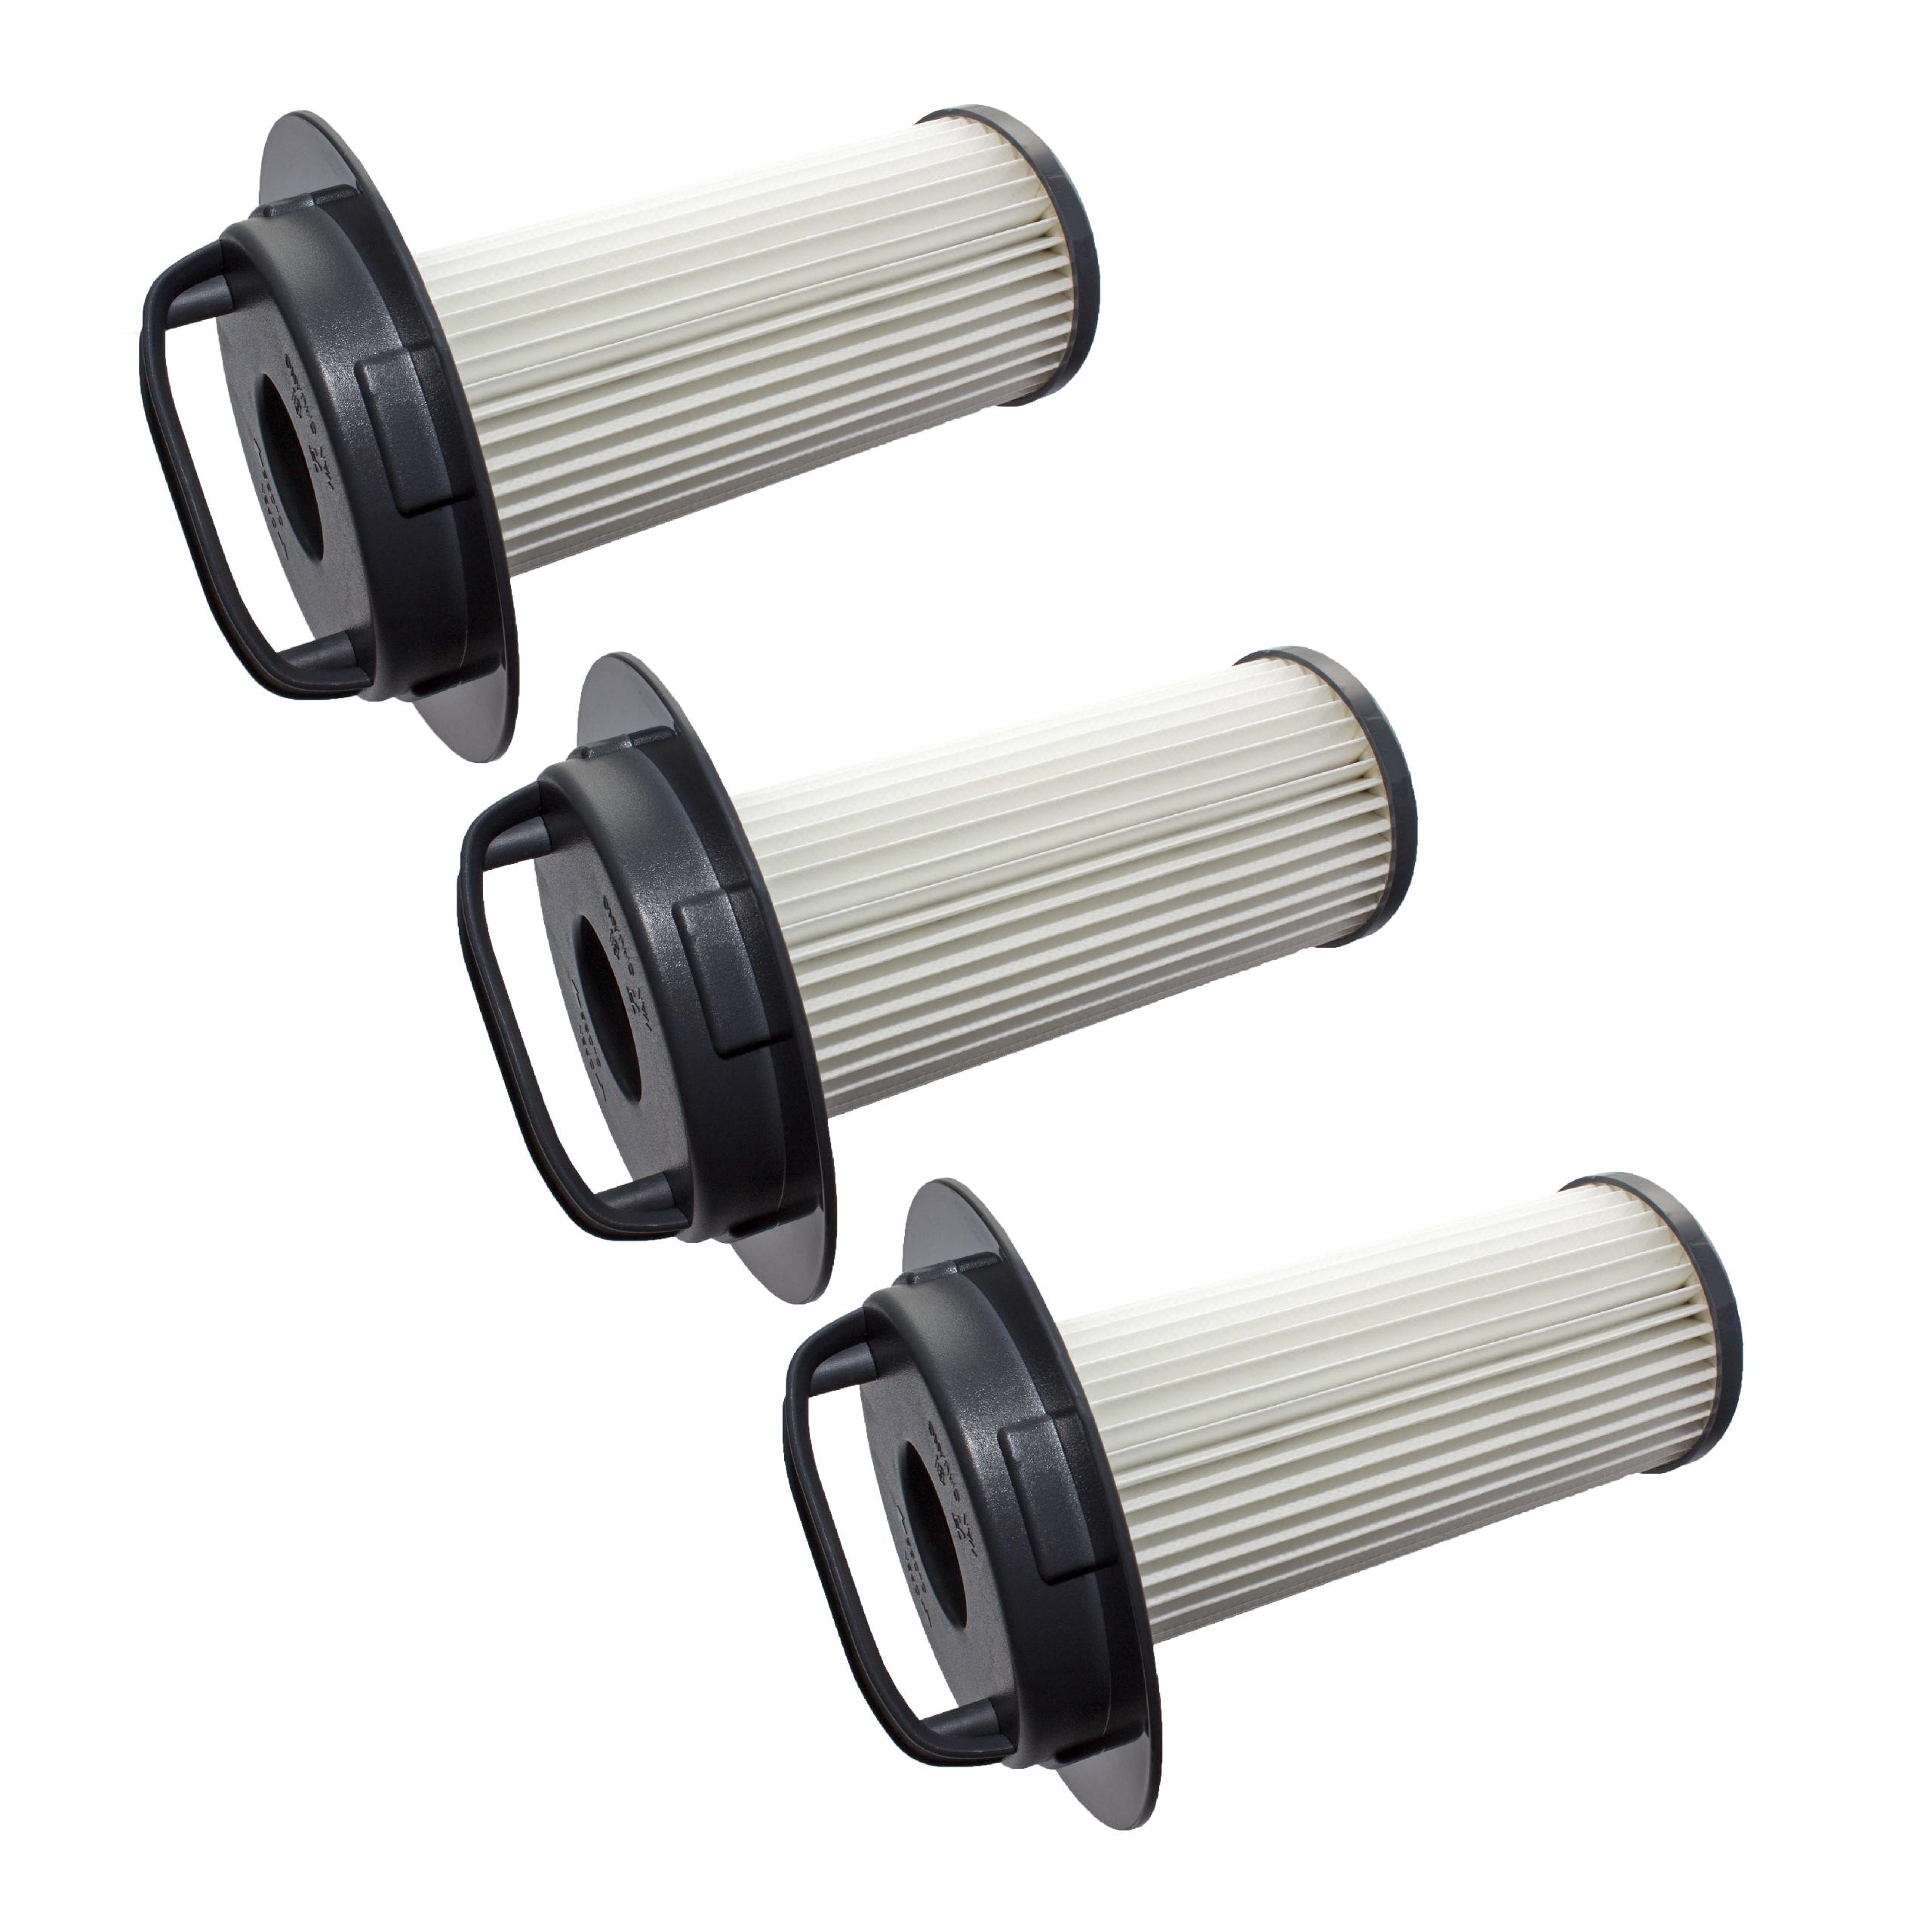 3x Filtro reemplaza Philips 432200524860, FC8048, 432200517520 para aspiradora - filtro Hepa negro / blanco